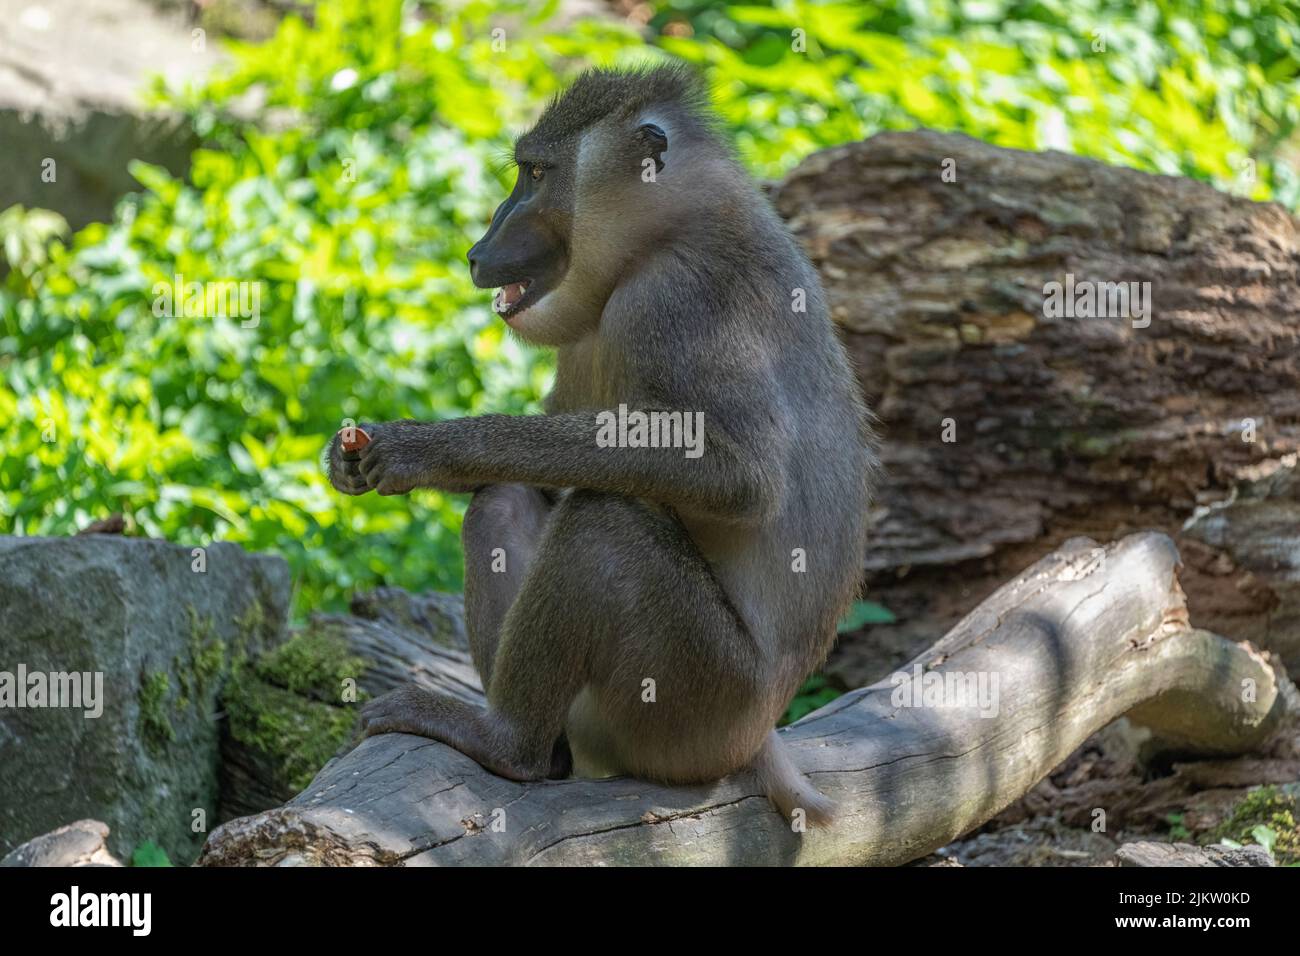 Mono de fotografías e imágenes de alta resolución Alamy